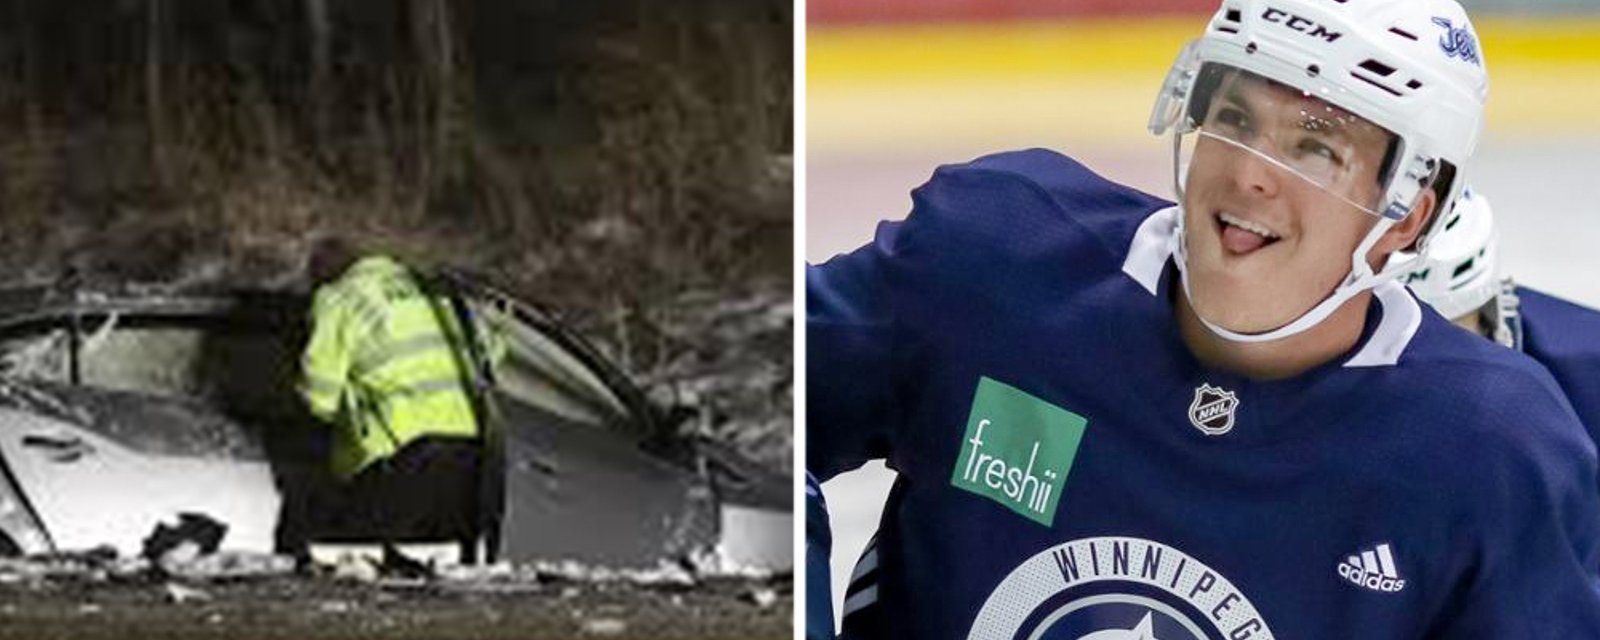 Jets prospect Samberg involved in multi-vehicle accident in Minnesota